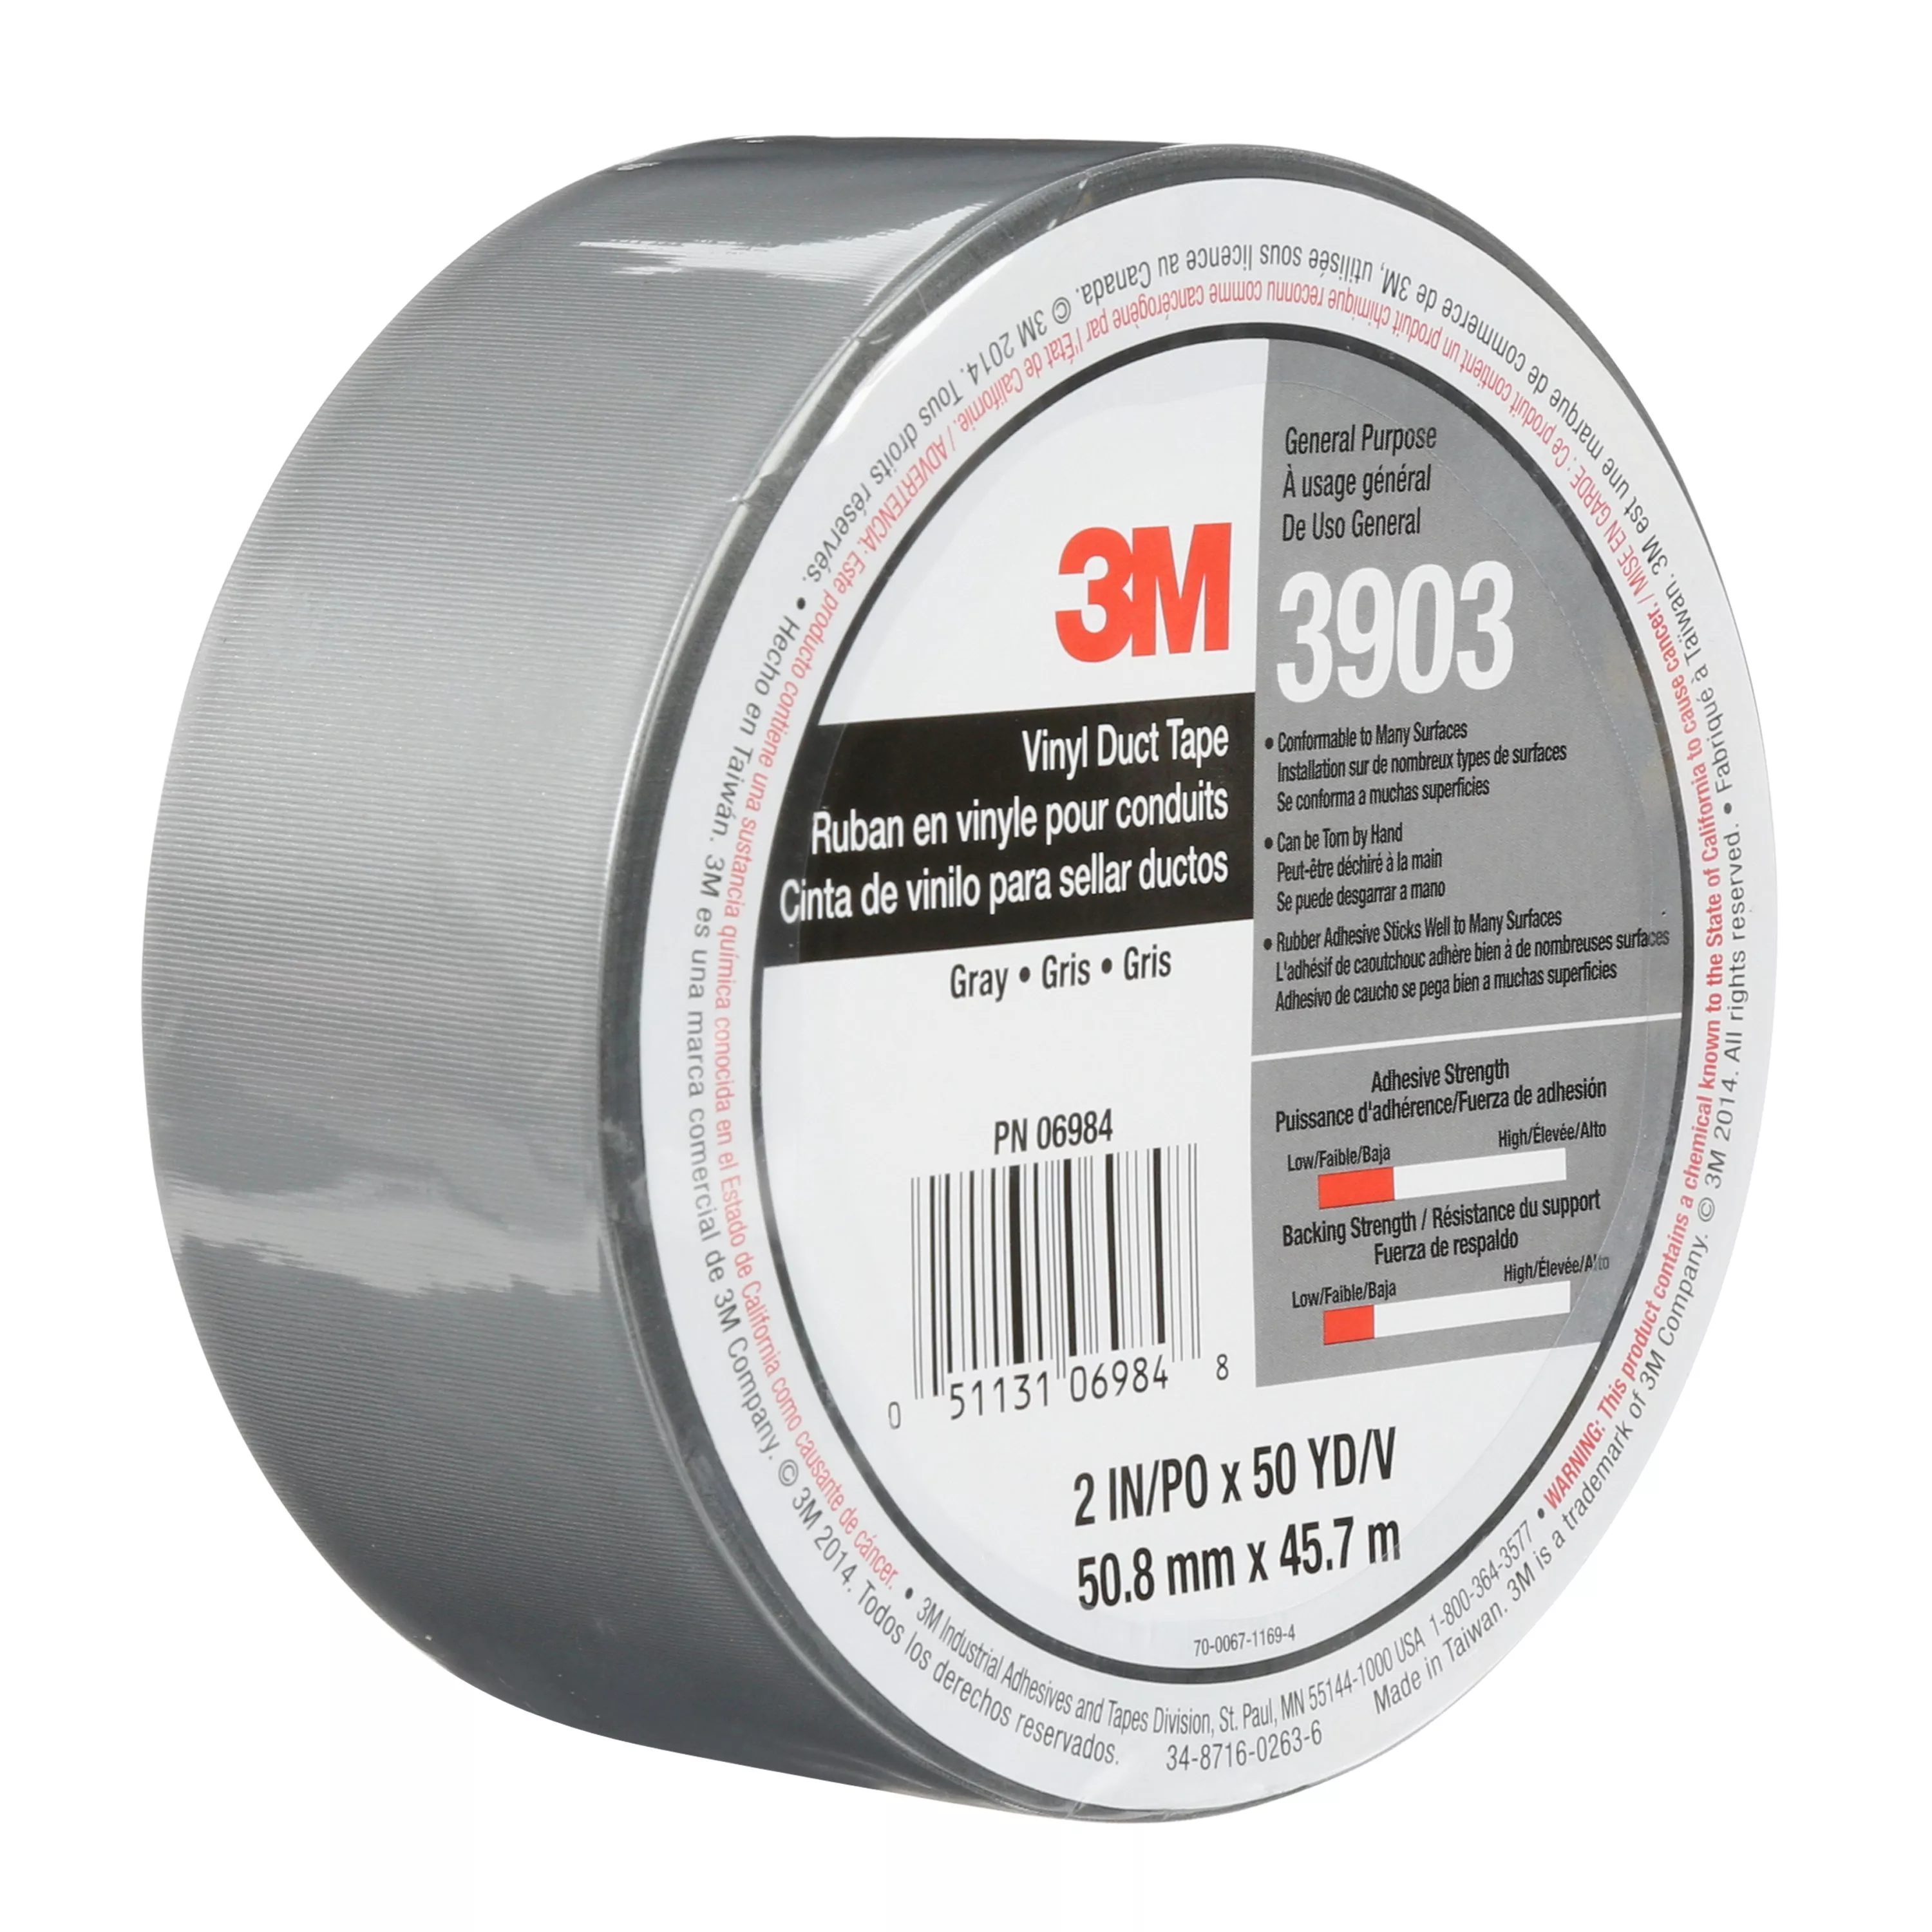 SKU 7100145925 | 3M™ Vinyl Duct Tape 3903